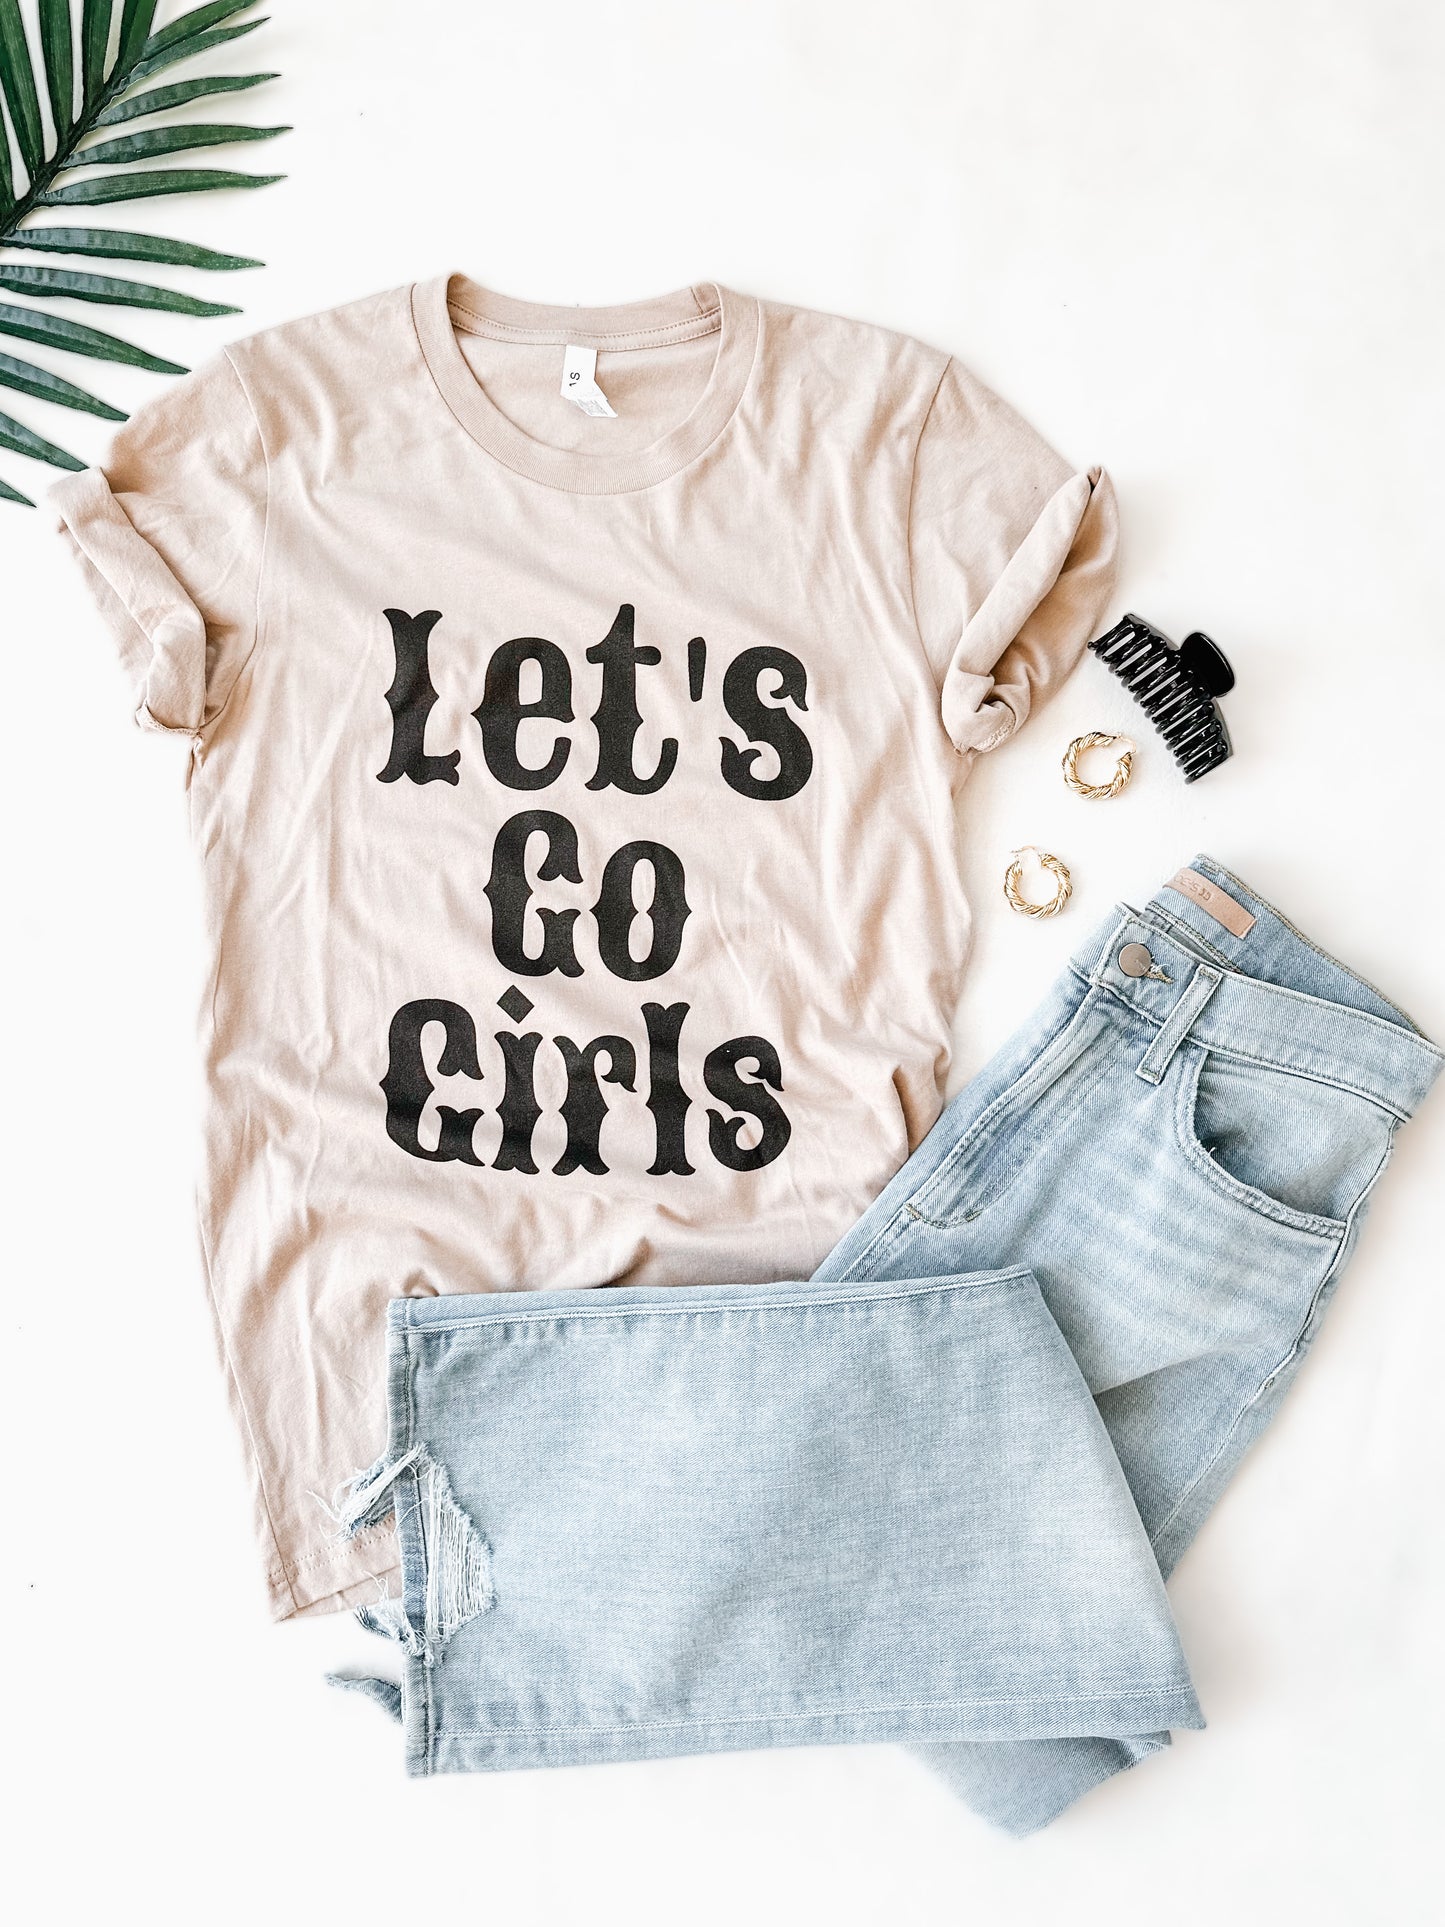 Let's Go Girls -Tan